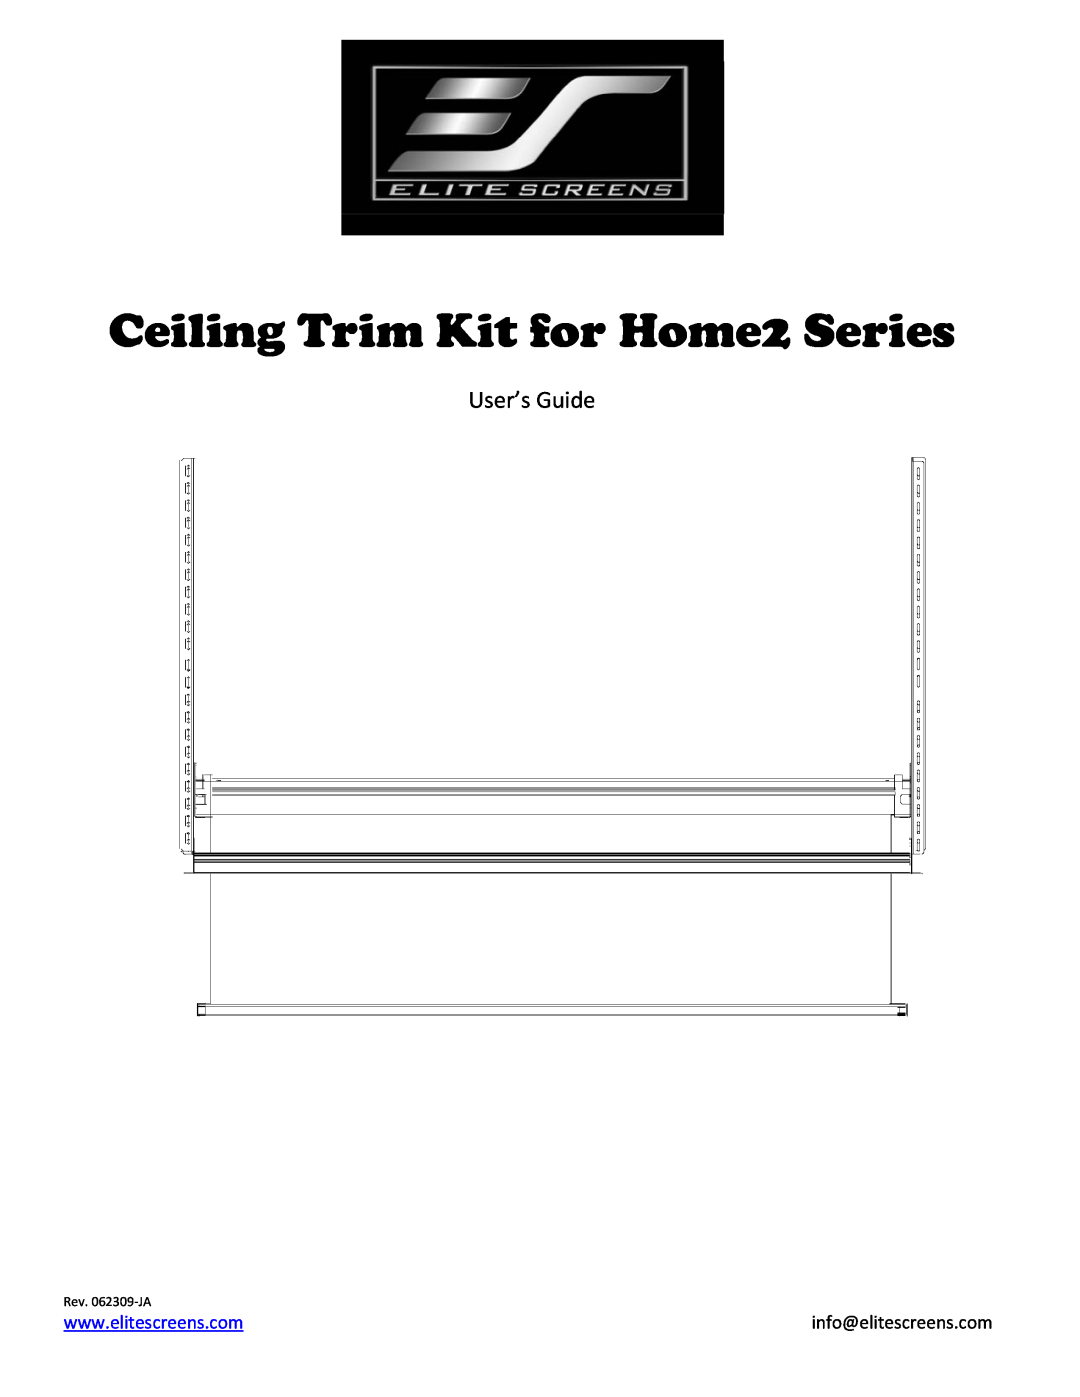 Elite Screens HQ7160 manual info@elitescreens.com, Ceiling Trim Kit for Home2 Series, User’s Guide, Rev. 062309‐JA 